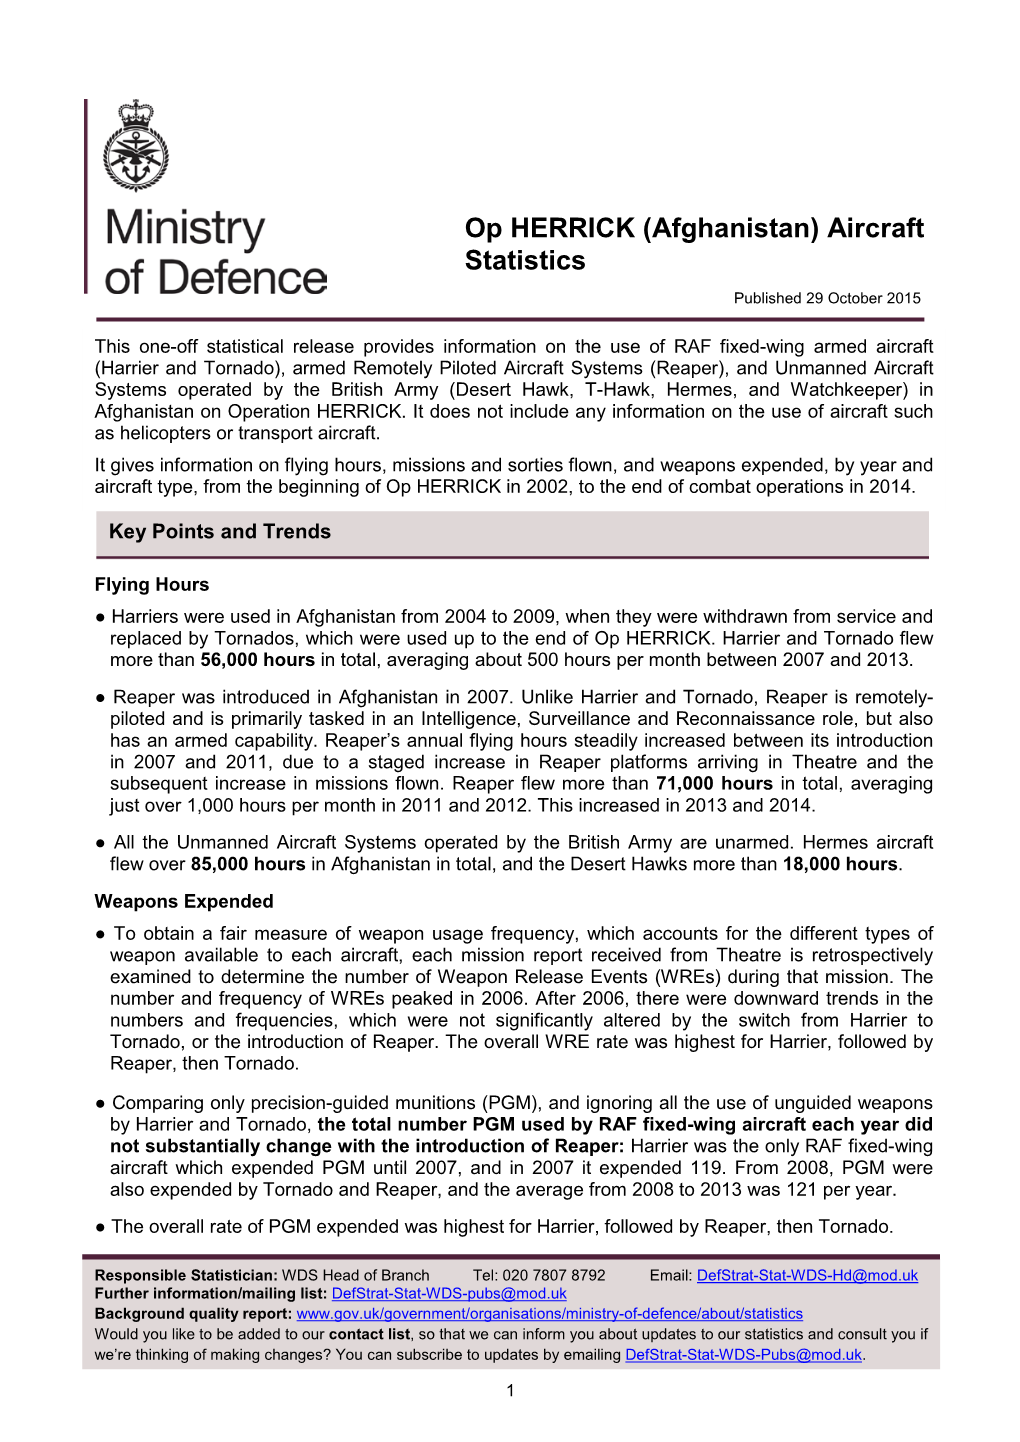 Operation Herrick (Afghanistan) Aircraft Statistics